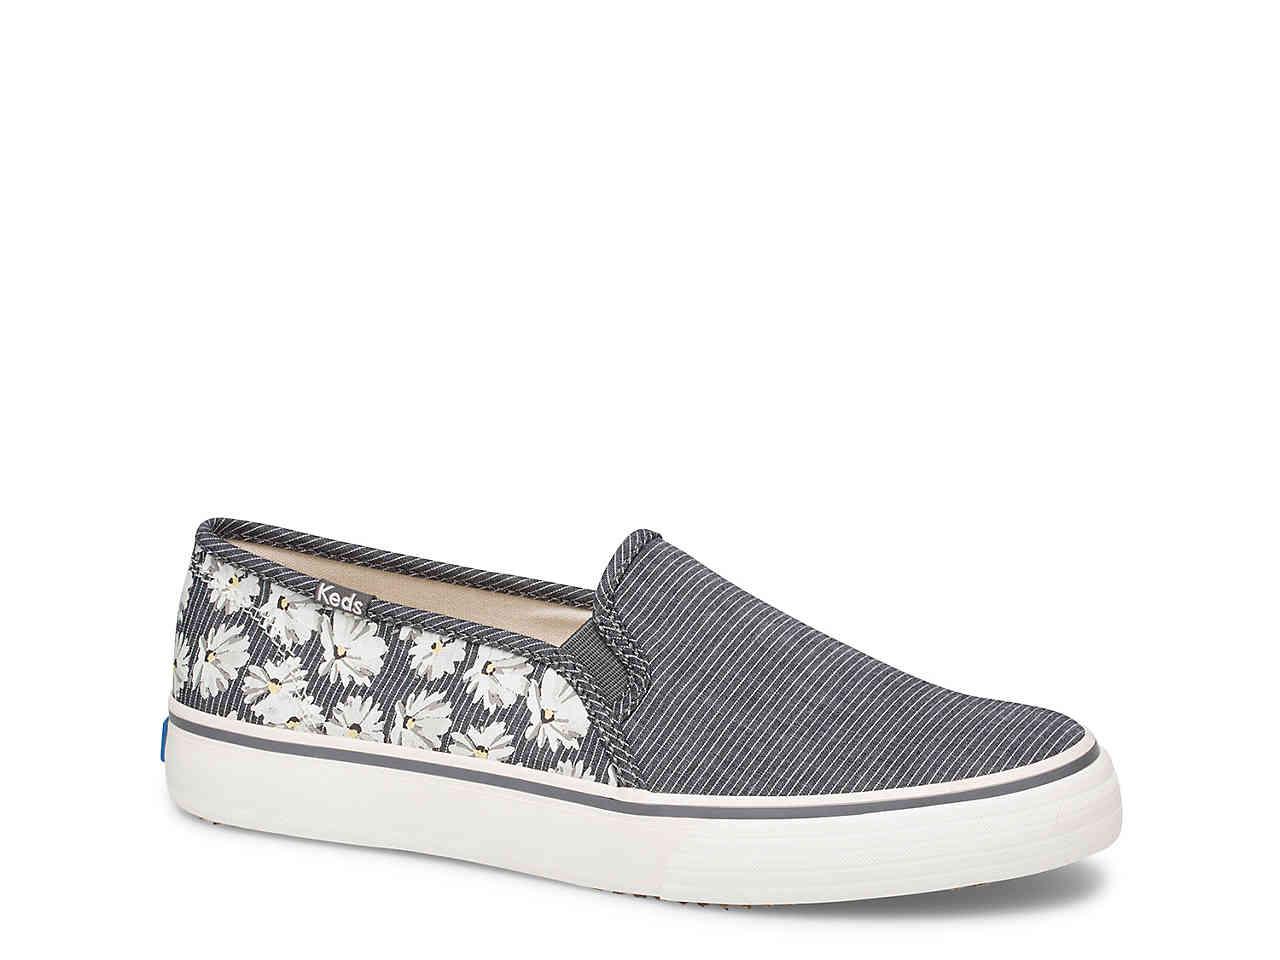 Keds Double Decker Slip-on Sneaker in Grey/White Floral (Gray) - Lyst